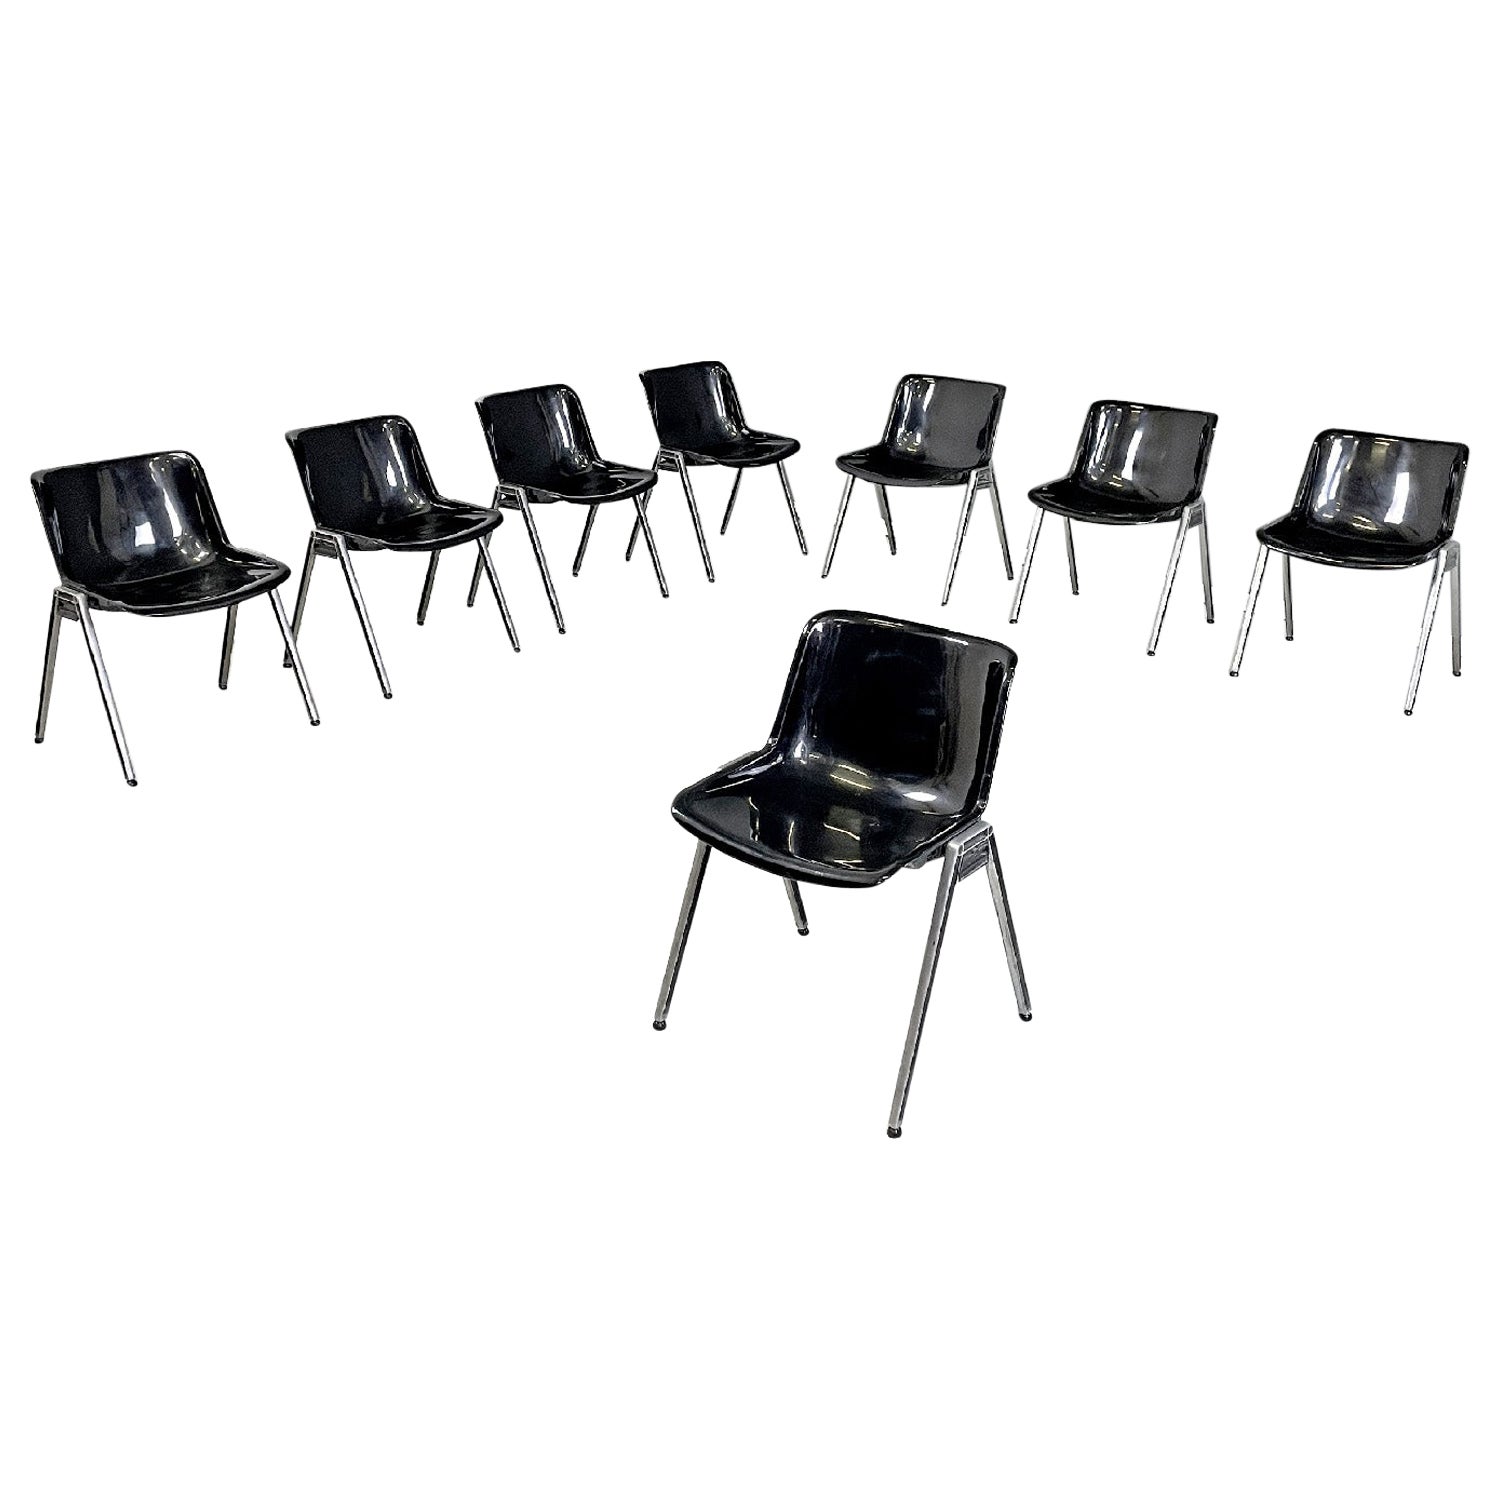 Italian modern black plastic chairs Modus SM 203 by Borsani for Tecno, 1980s For Sale